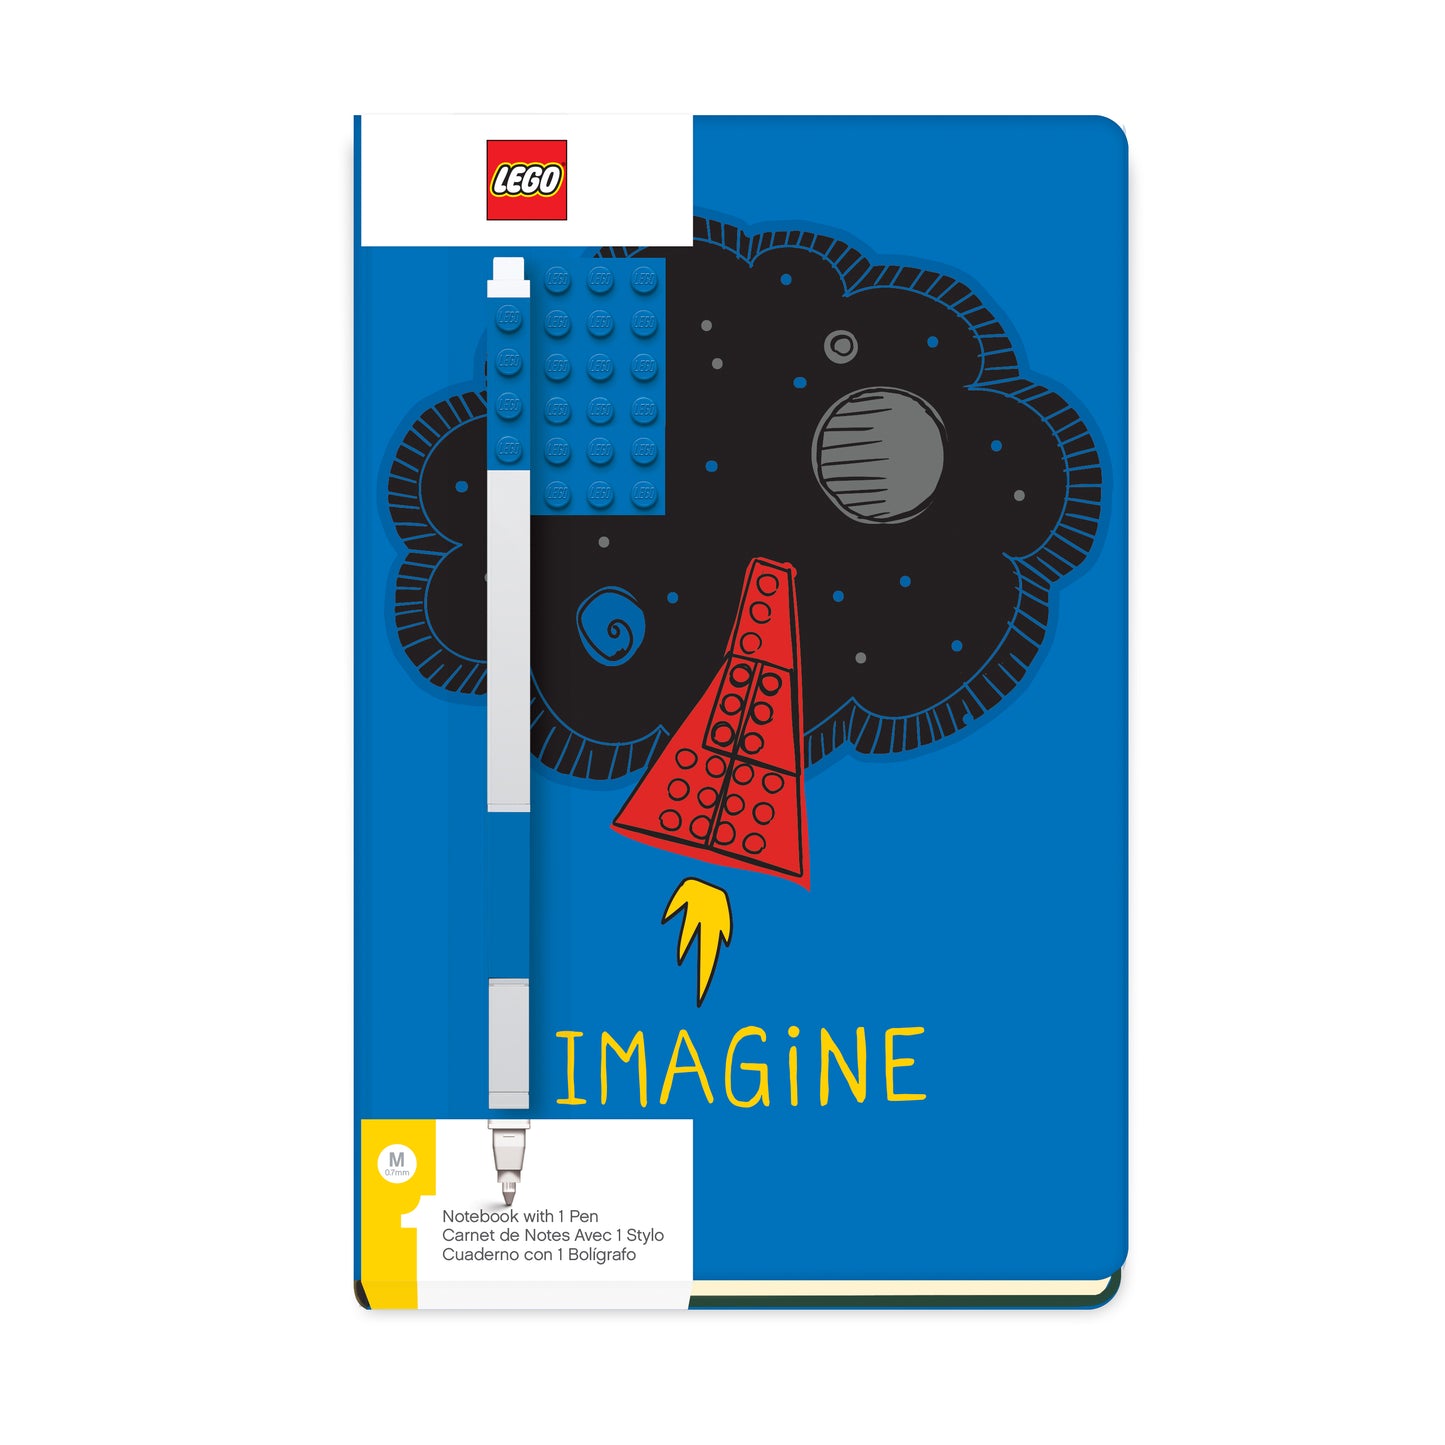 IQ LEGO® 2.0 Stationery Imagine Hardcover Journal with Blue Gel Pen Set (52523)